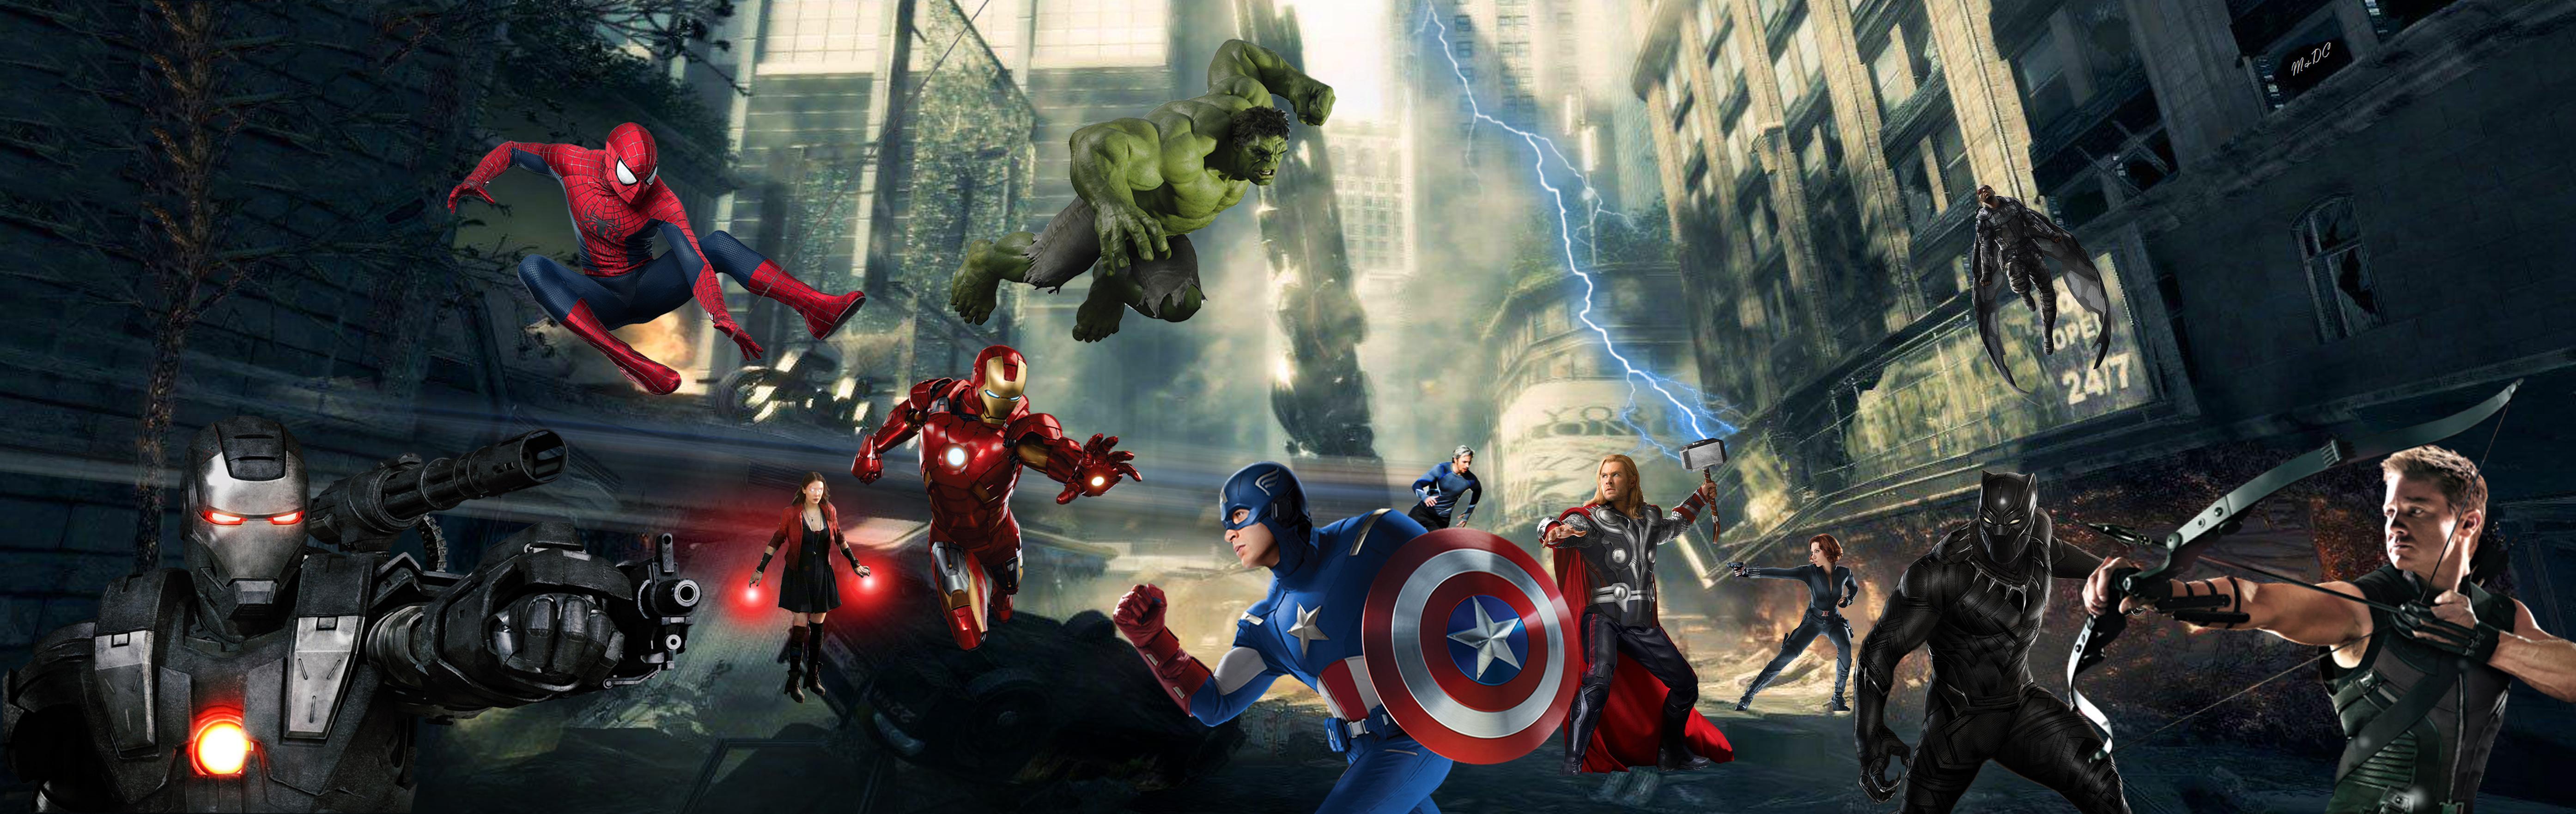 Avengers Assemble Artwork 4k, HD Superheroes, 4k Wallpaper, Image